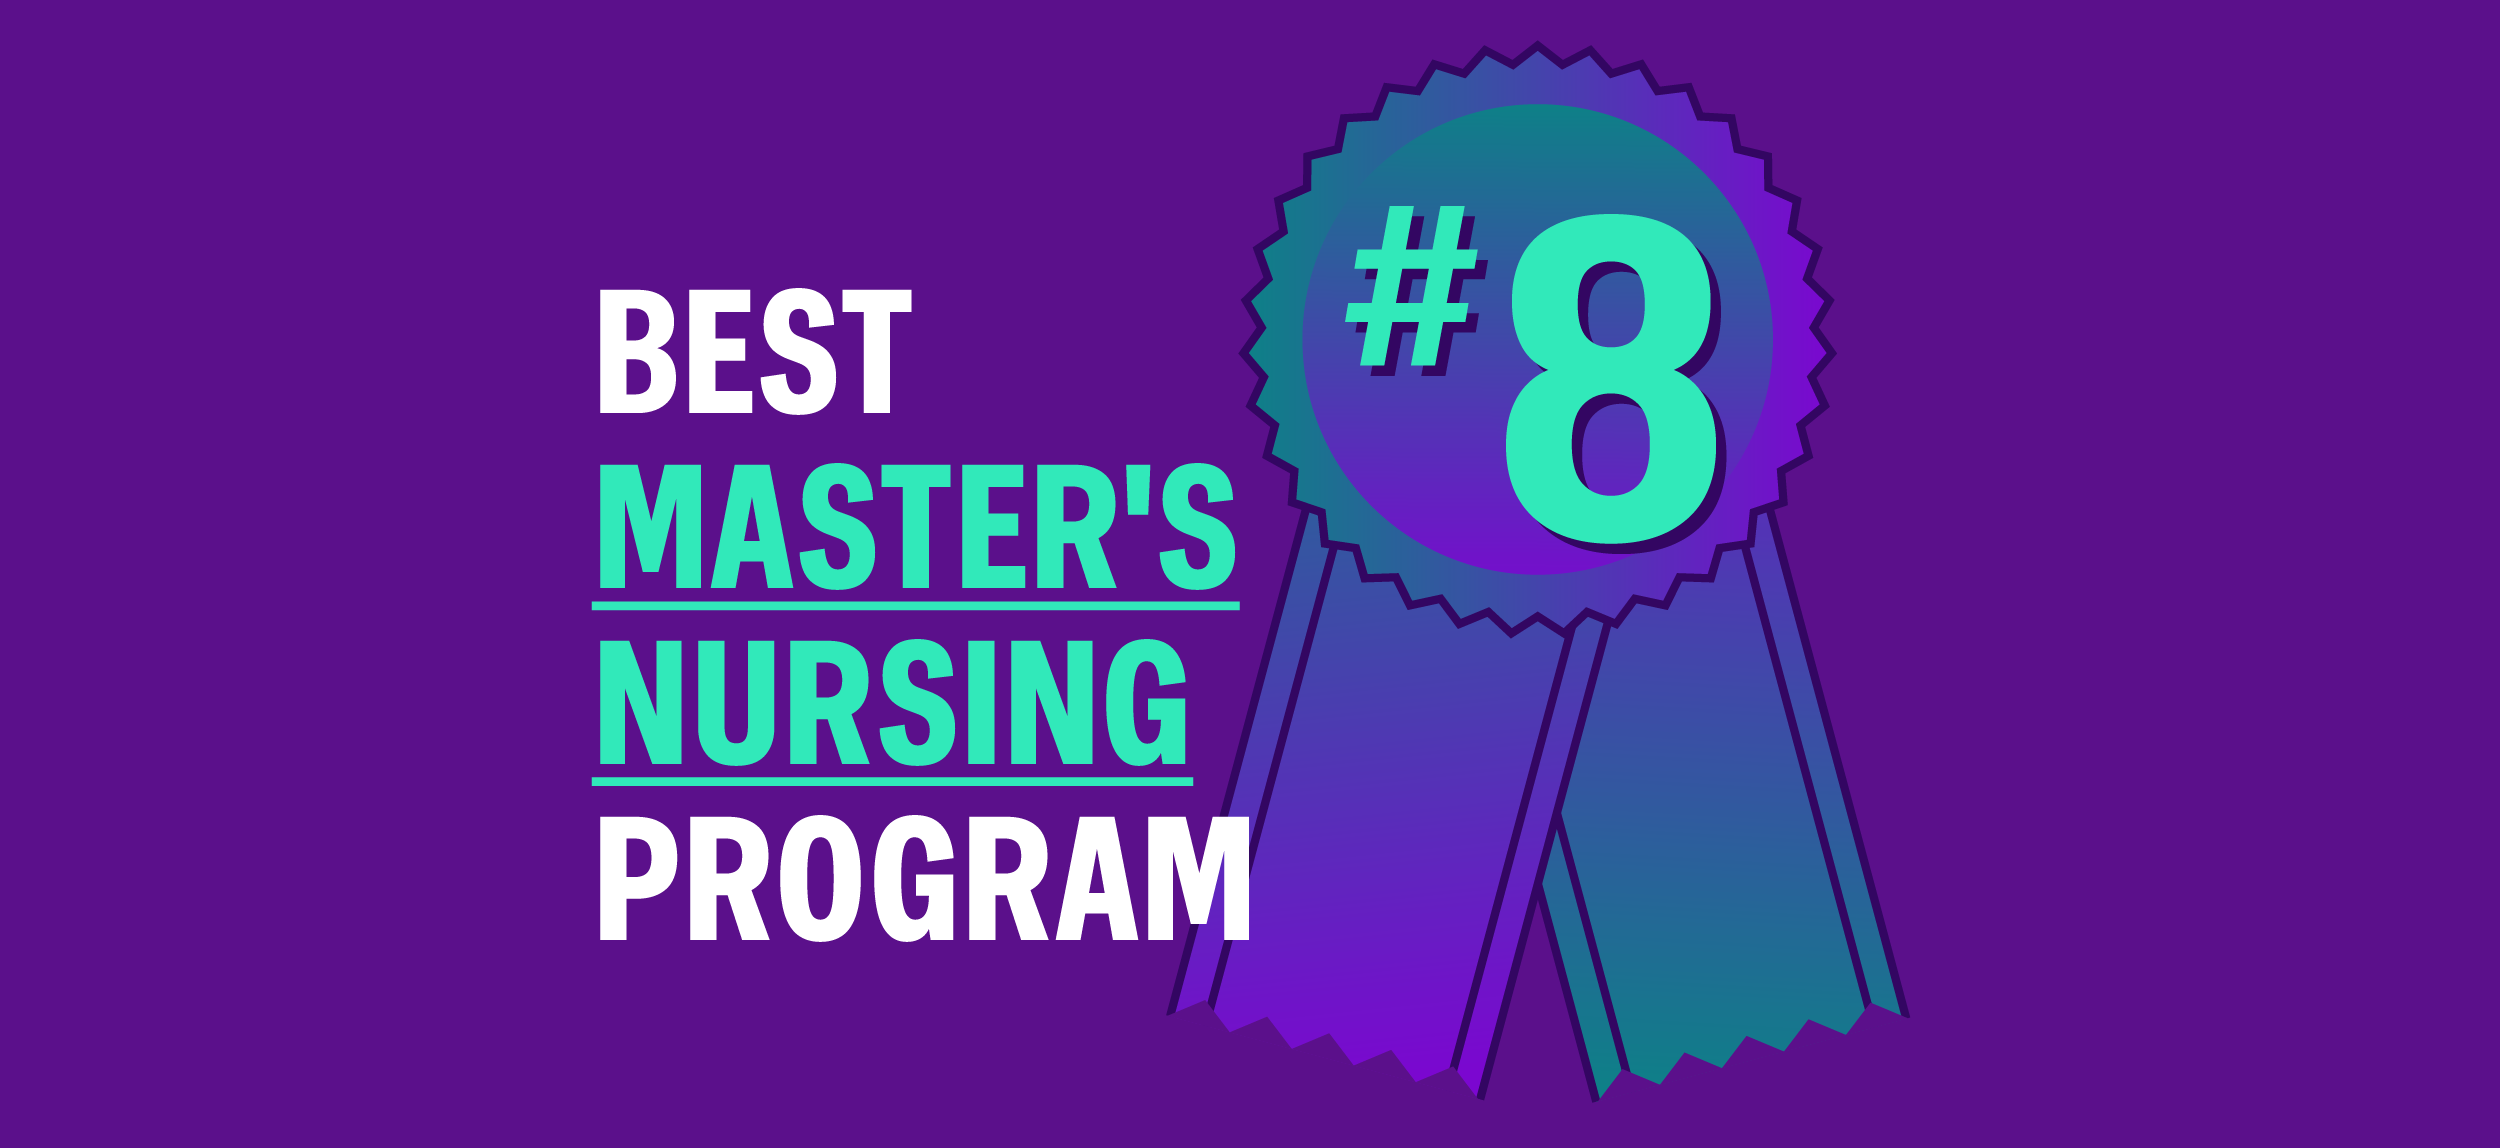 Best Master's Nursing Program #8 graphic